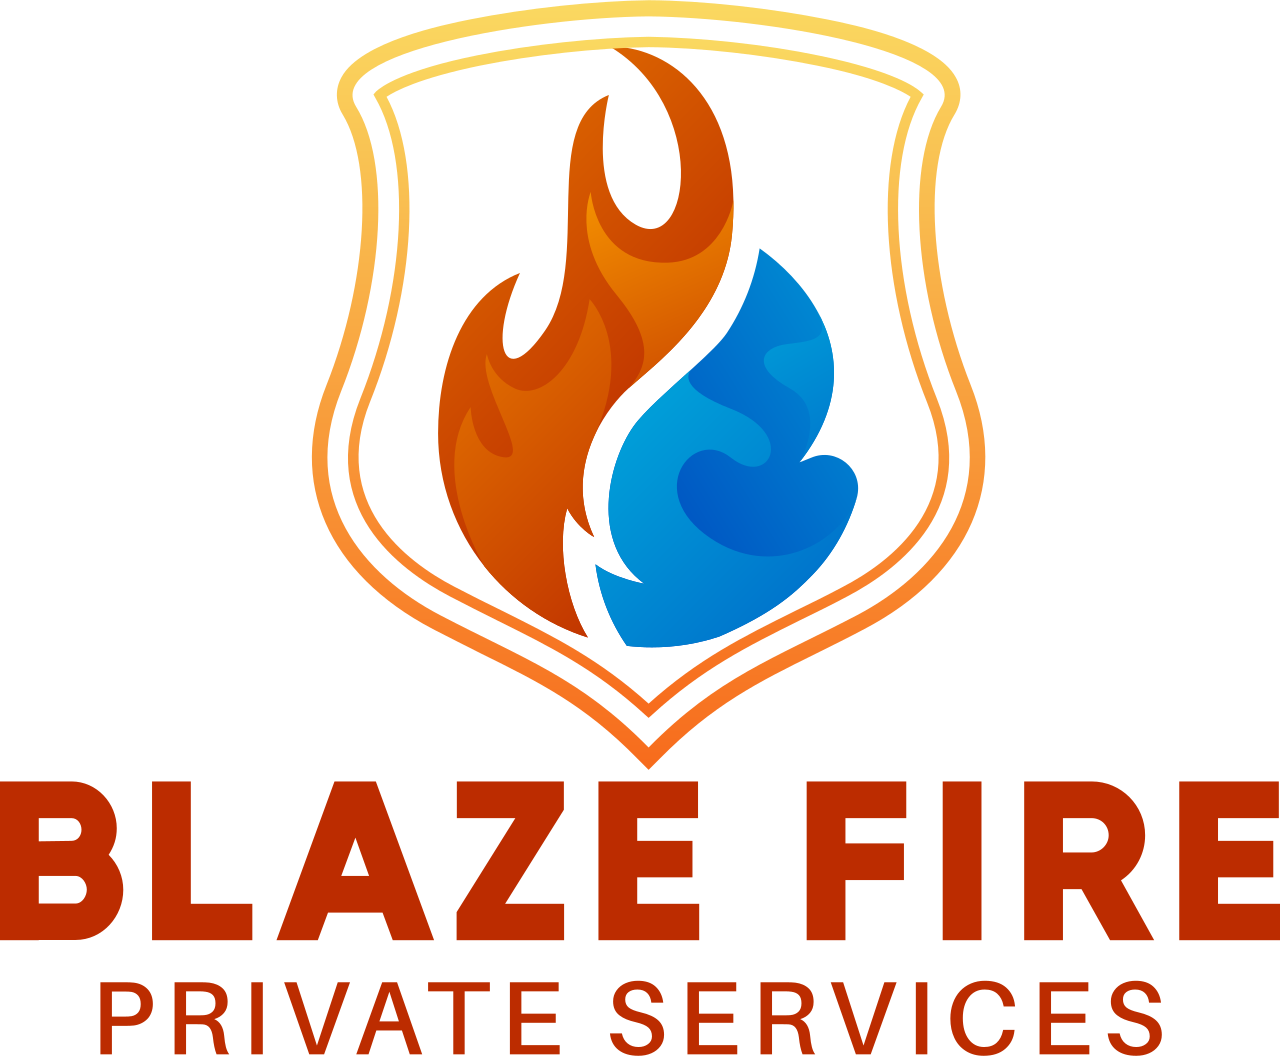 BLAZE FIRE's logo